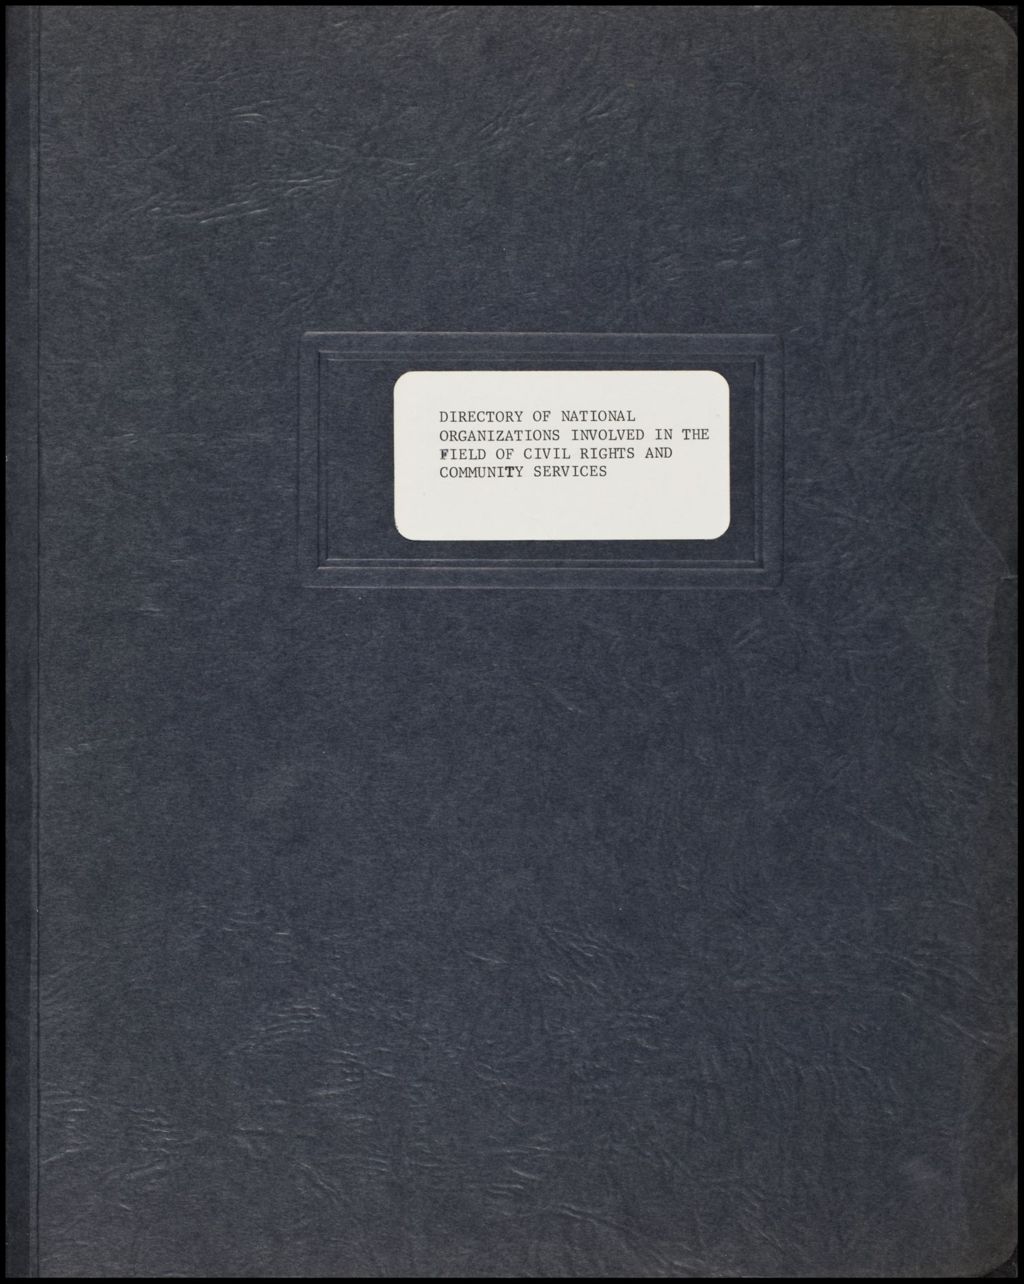 Civil Rights Organizational Directory, 1969 (Folder IV-1055)